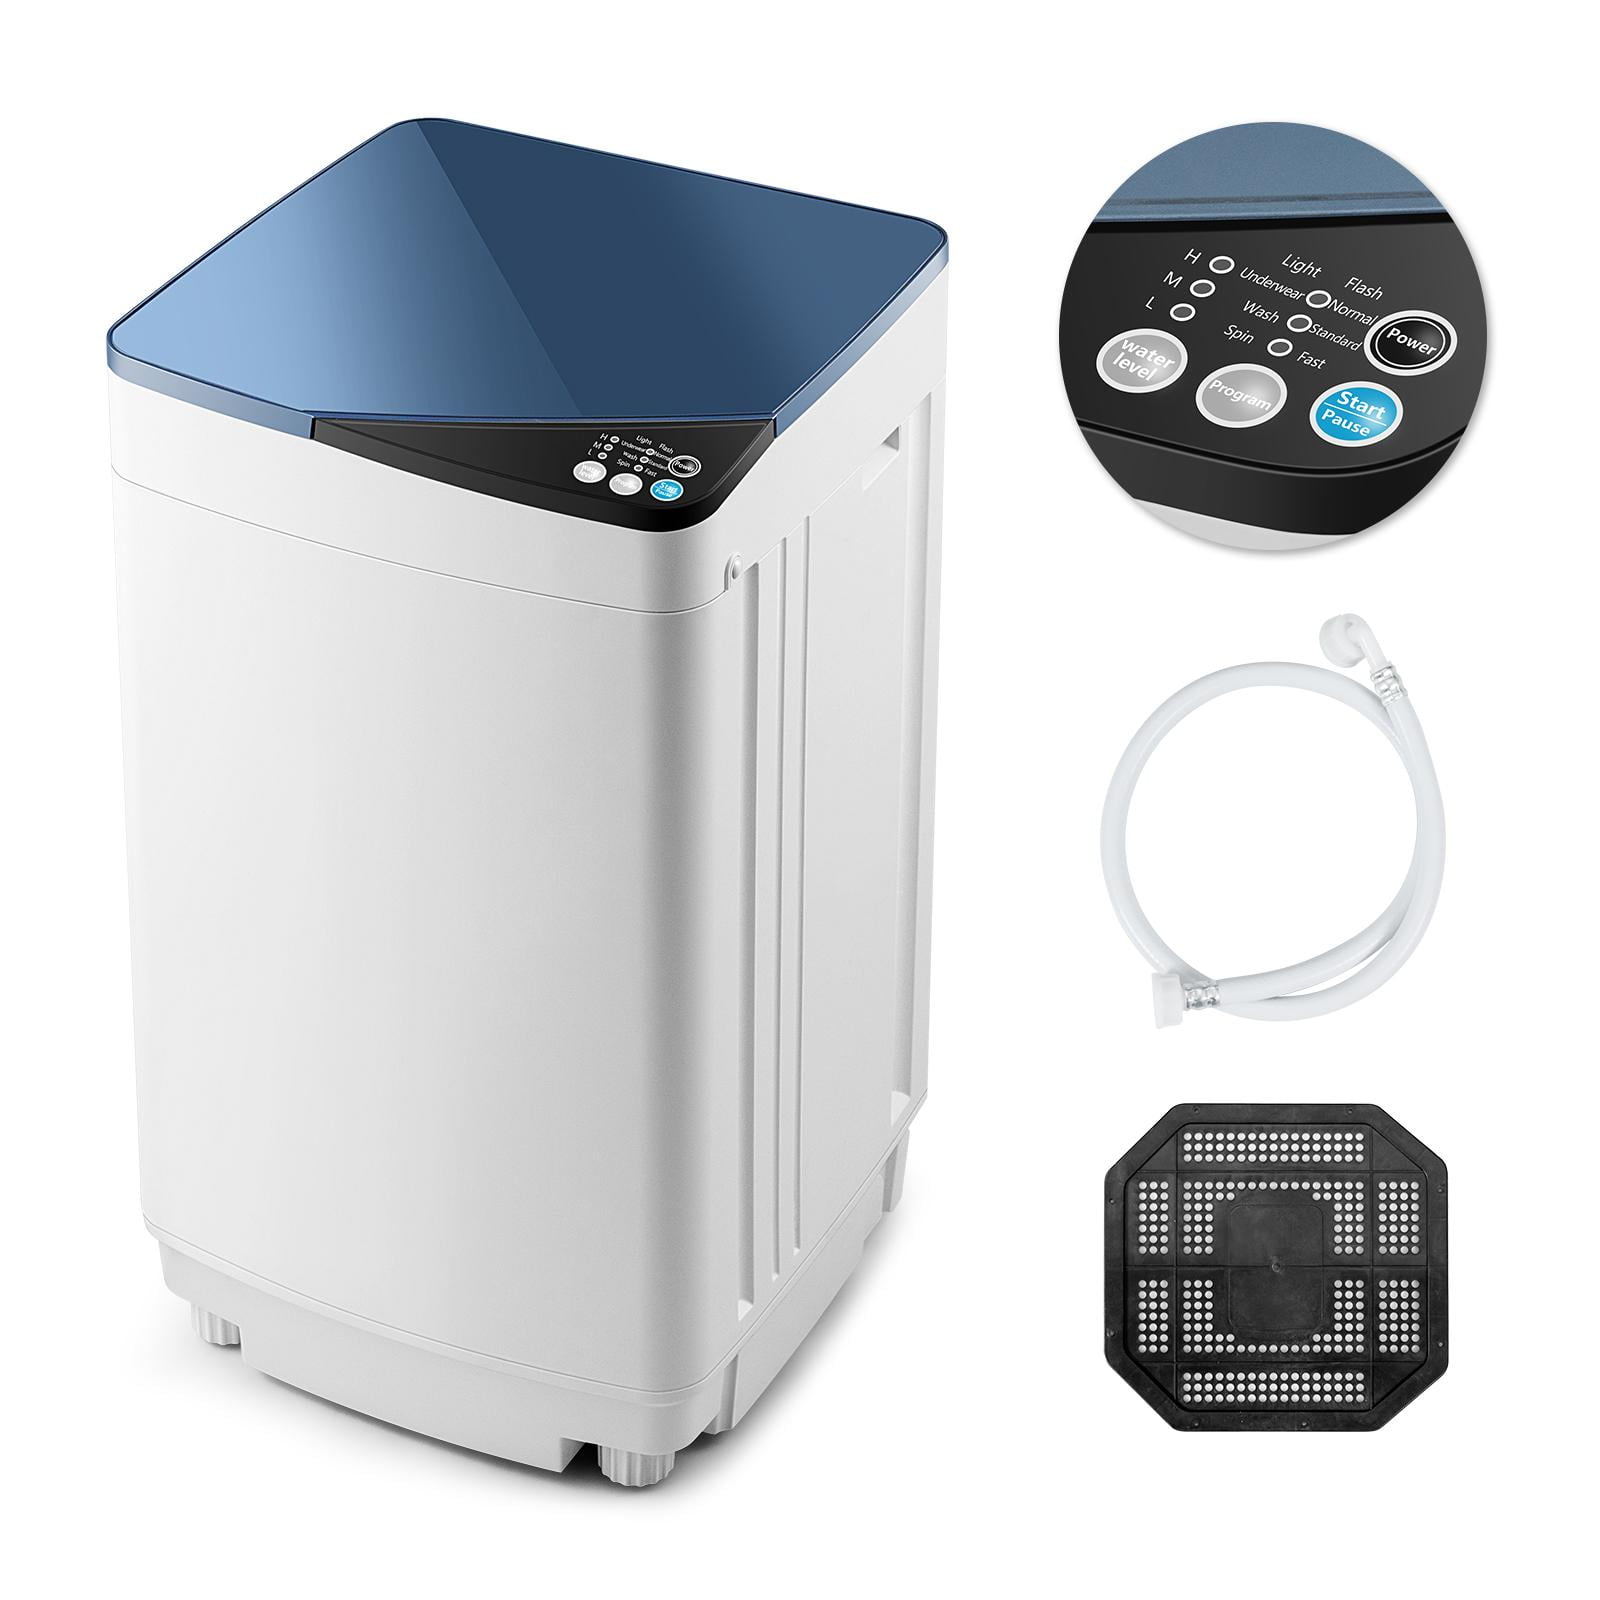 Gymax Full-Automatic Washing Machine Portable Compact Laundry